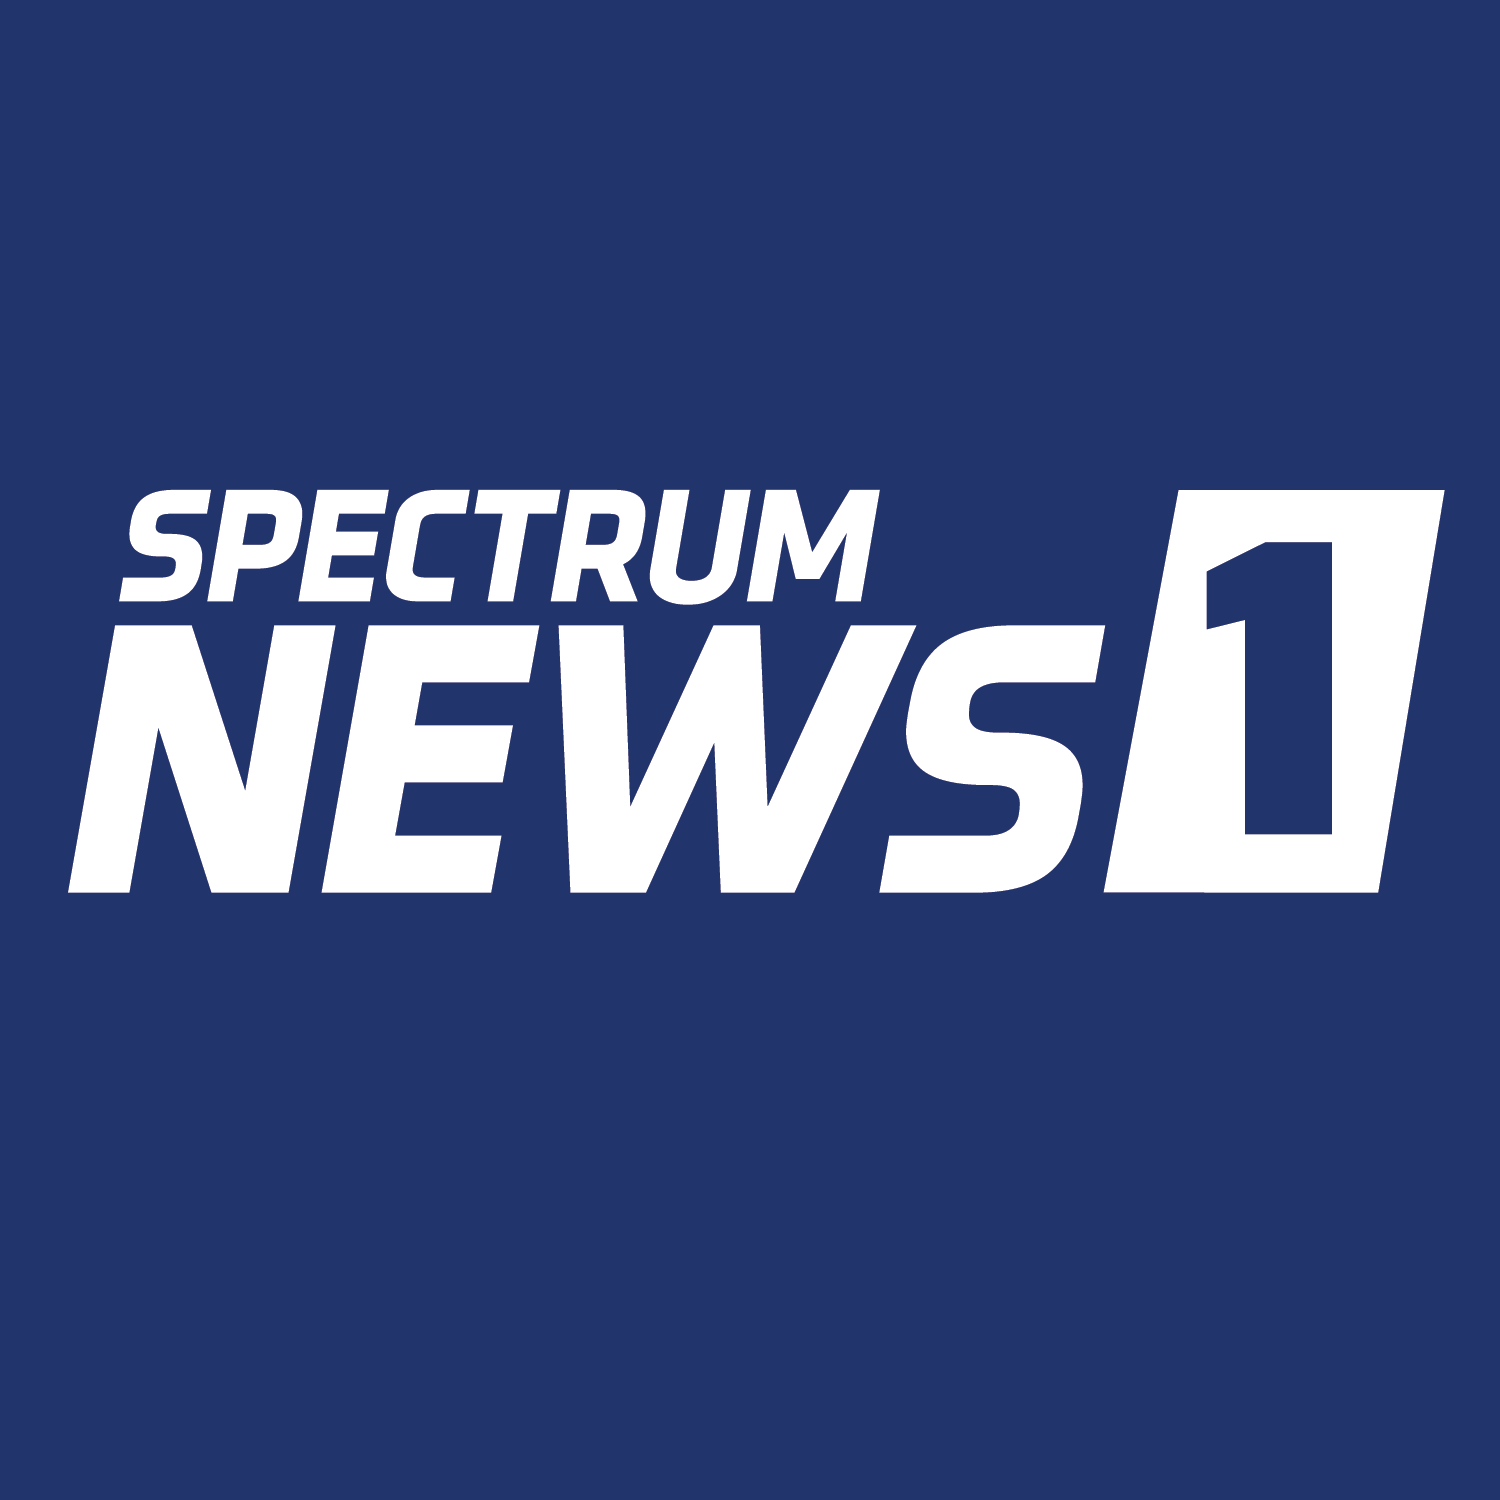 spectrum news logo 1